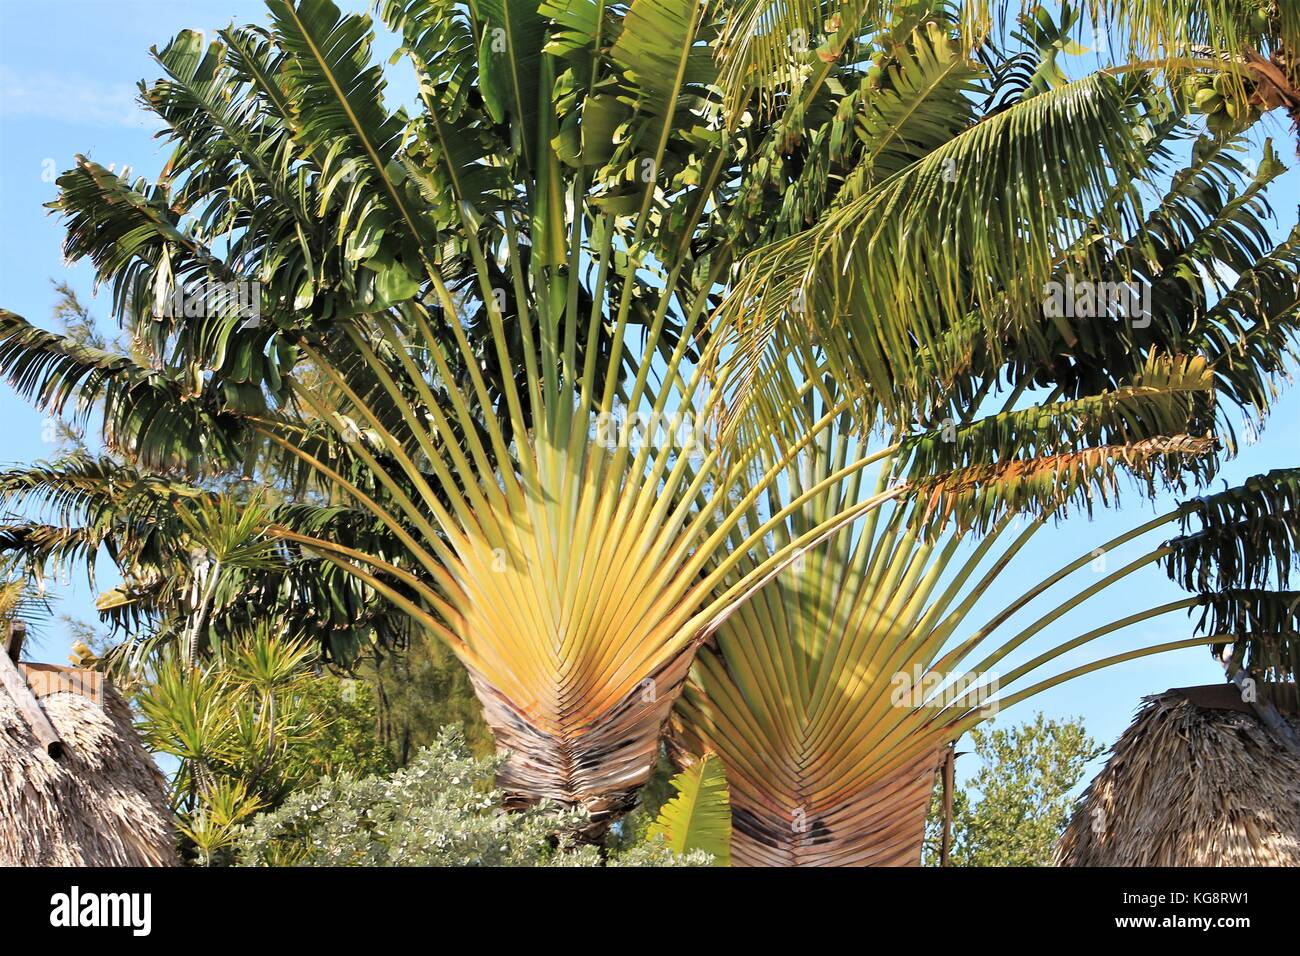 Fan like spread of palm fronds on a fan palm tree, Key West, Florida, USA Stock Photo